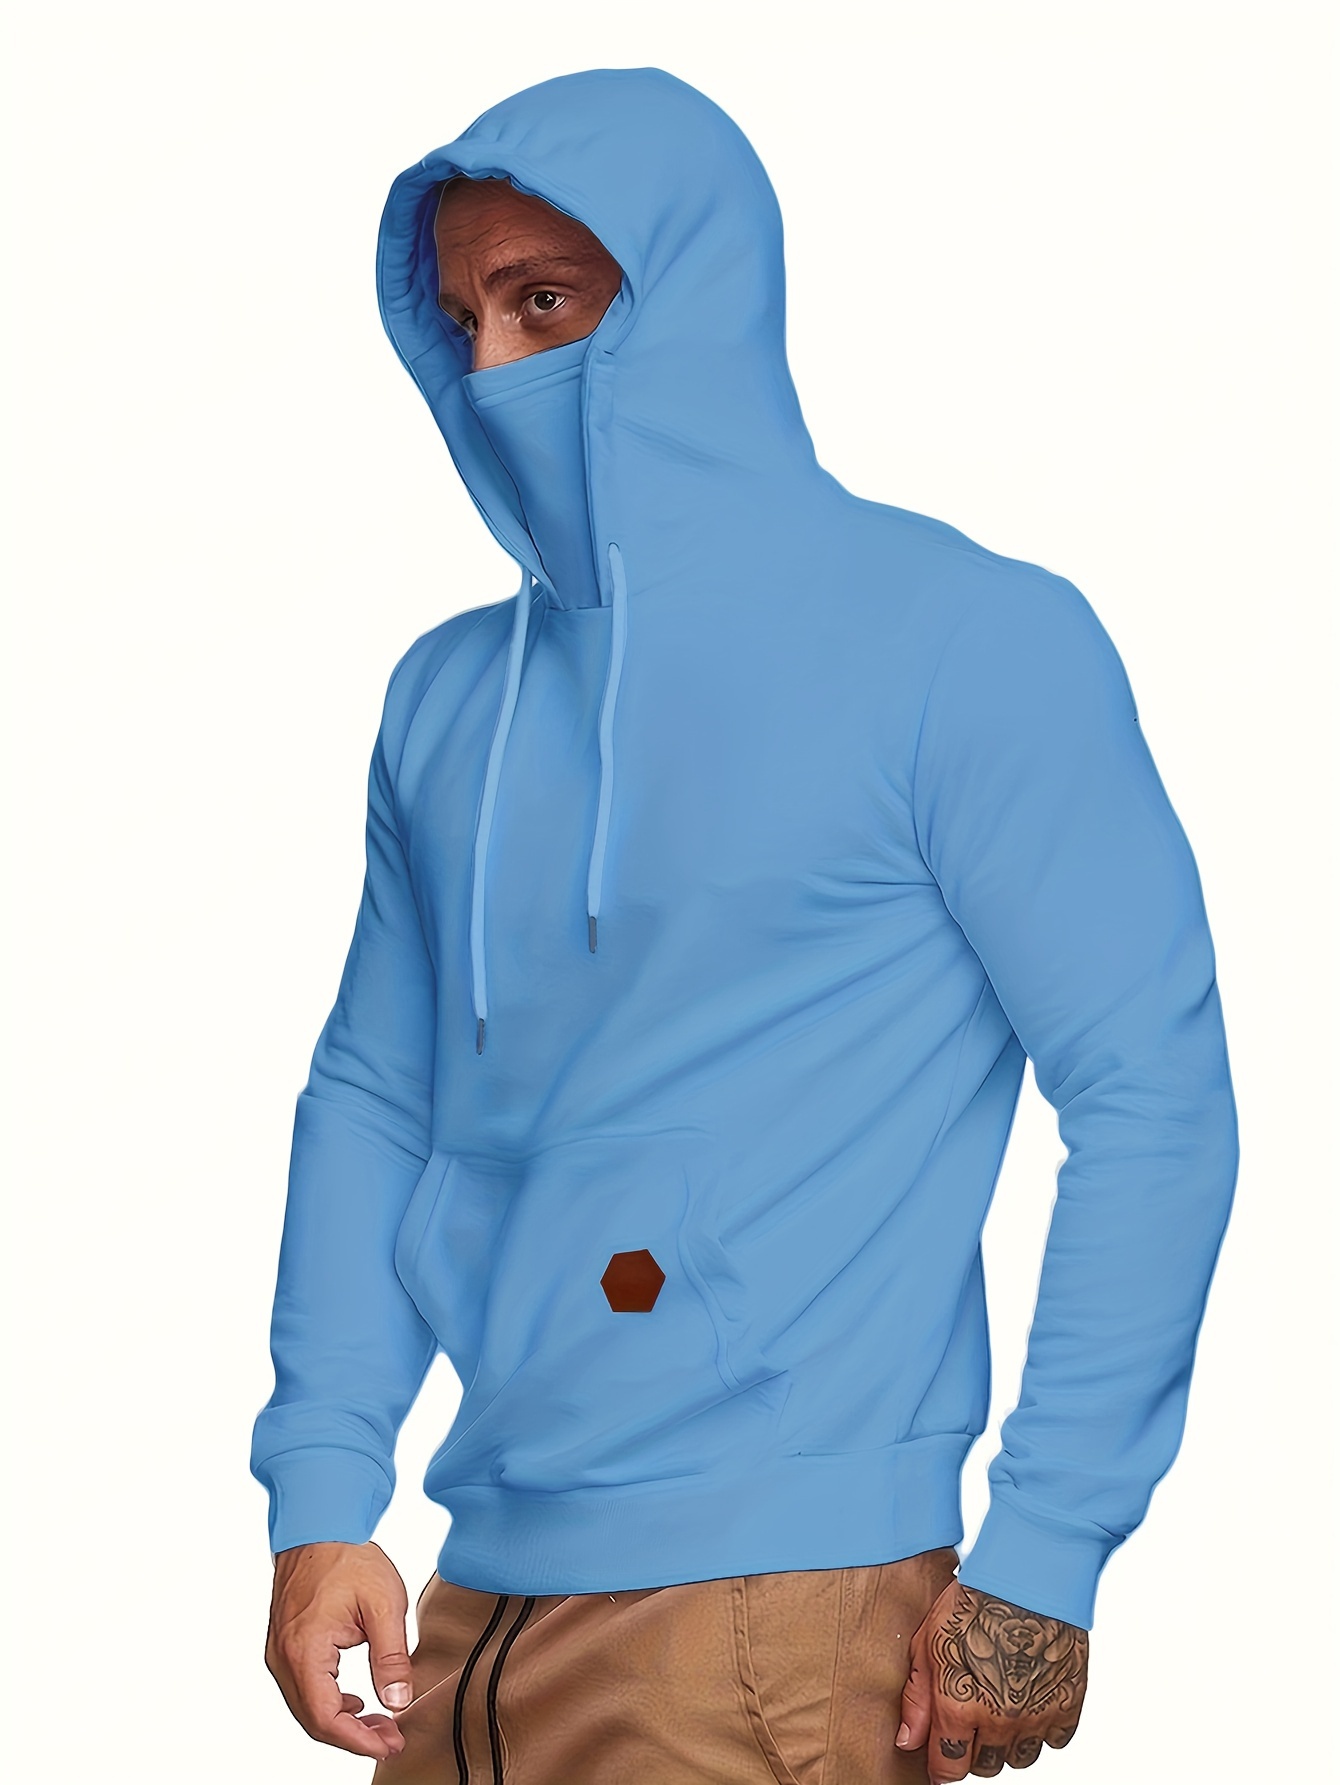 Men's Novelty Punk Hoodies 3D Printed Funky Hooded Sweatshirts Baggy Casual  Long Sleeve Tops with Kangaroo Pocket